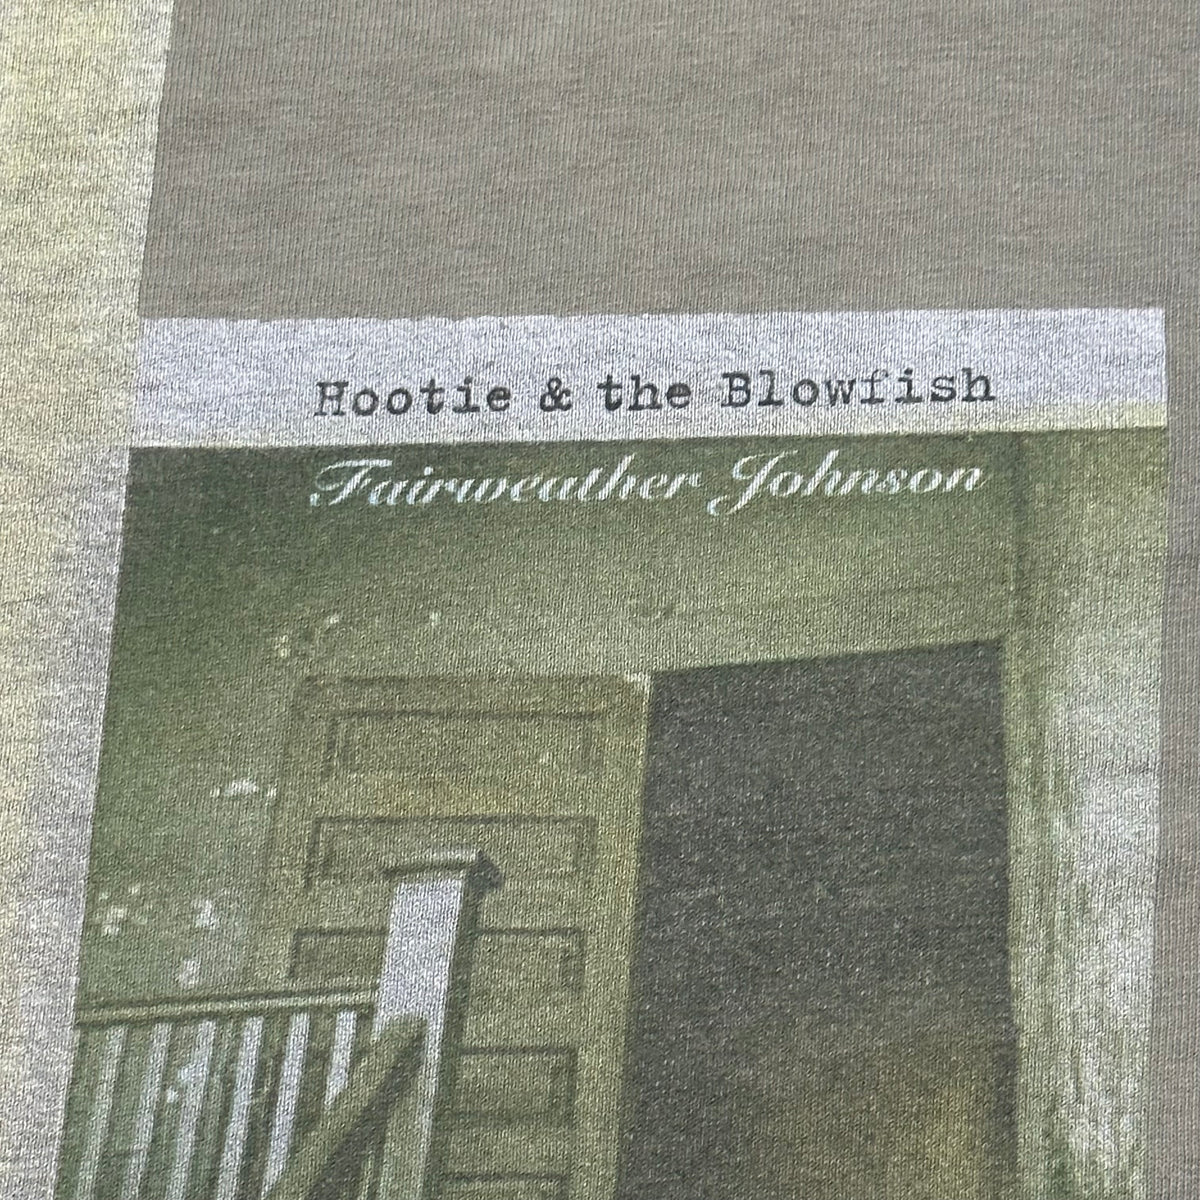 1996 Vintage Hootie and The Blowfish Tour Tee 90s Fairweather Johnson shirt